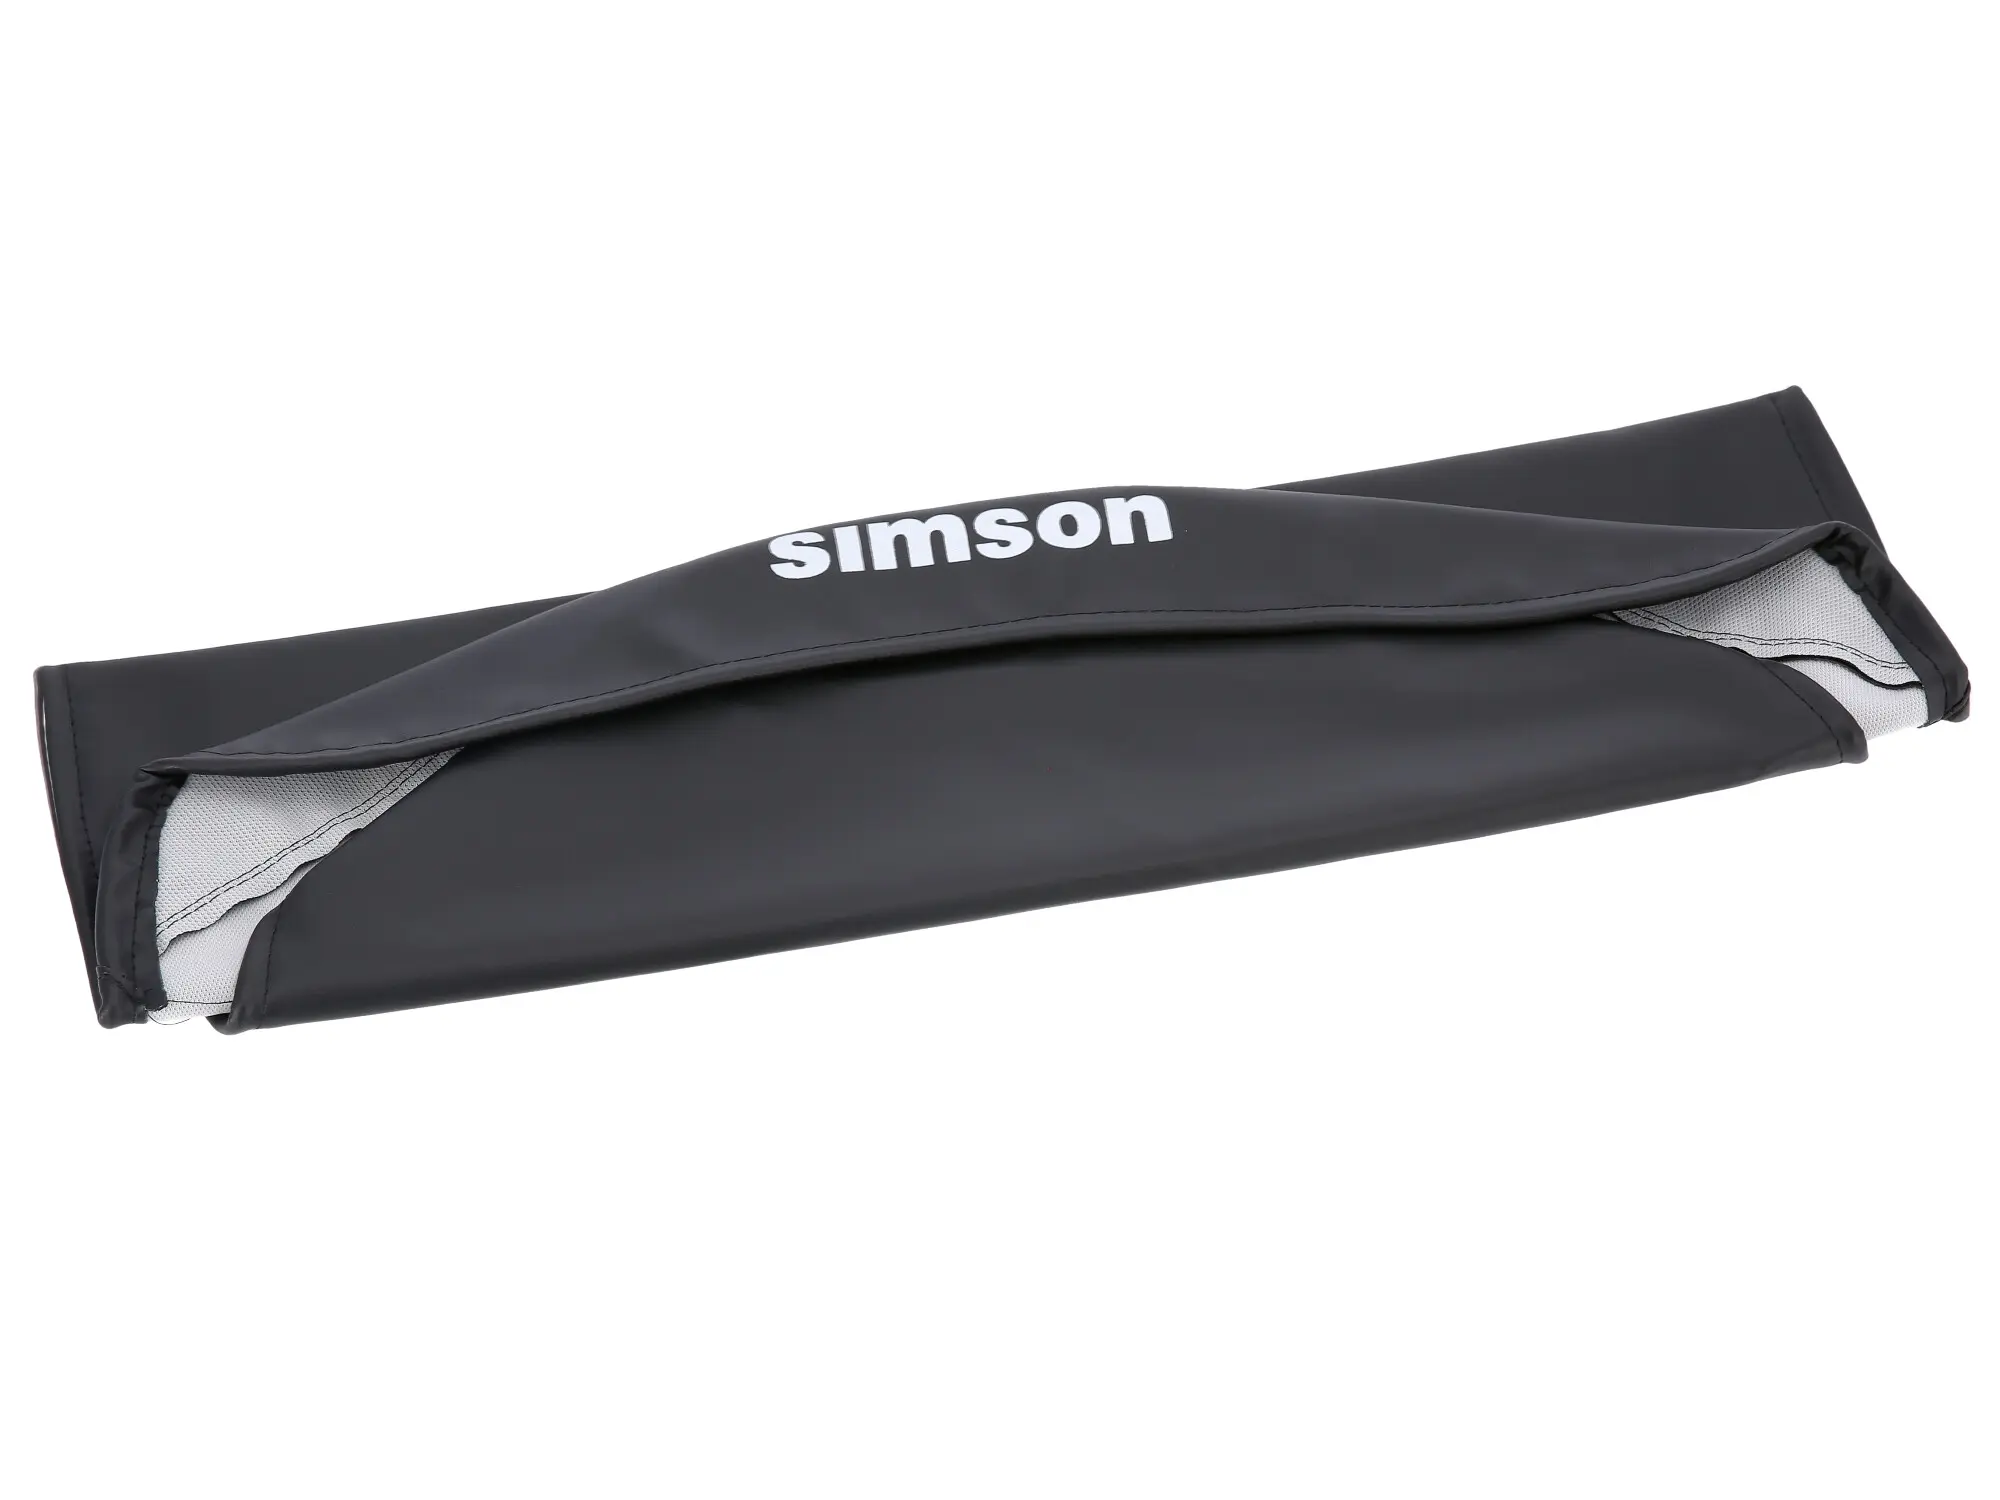 Sitzbezug glatt, schwarz mit SIMSON-Schriftzug - Simson S53, S83, SR50, SR80, Art.-Nr.: 10002829 - Bild 1